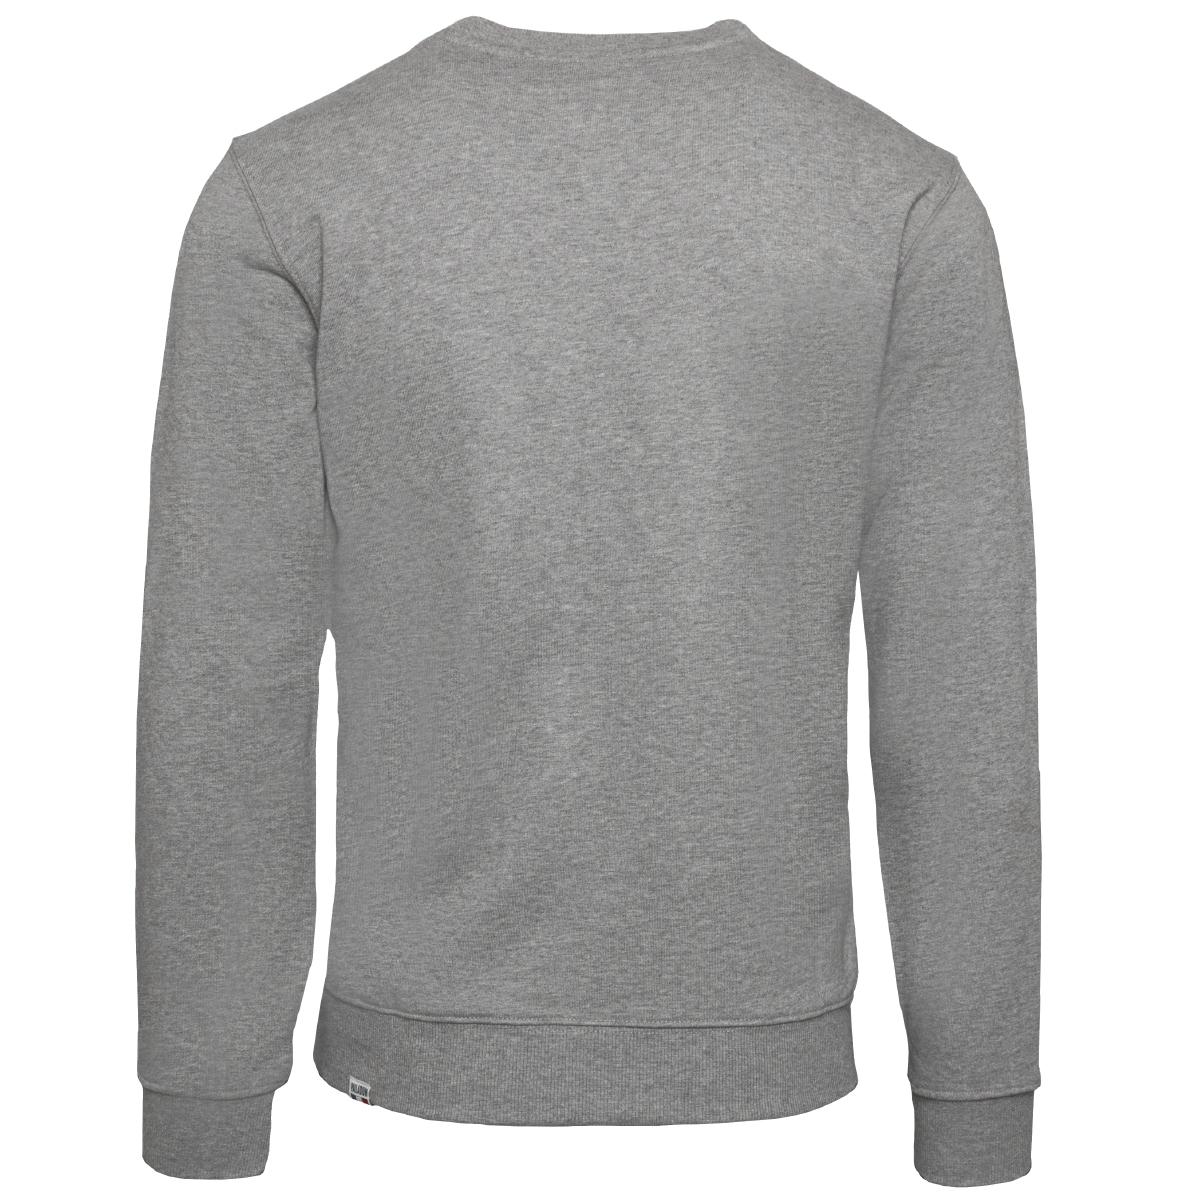 Palladium Originale France Sweatshirt